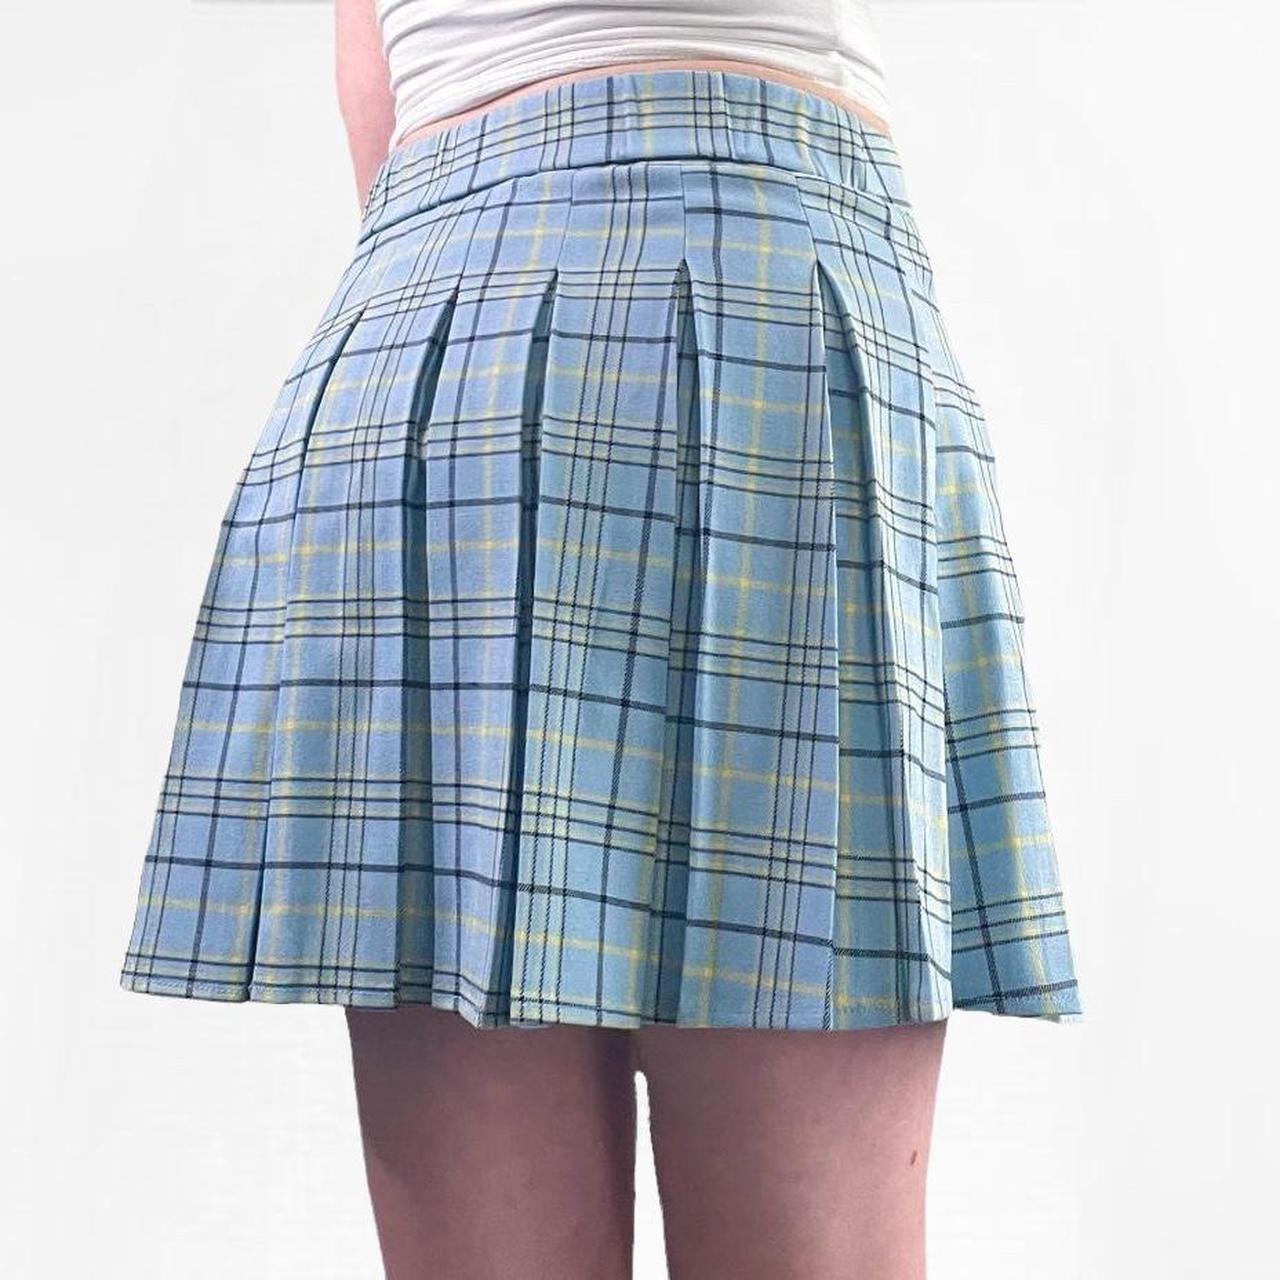 Product Image 2 - Pleated Tennis Mini Skirt

Amazing blue